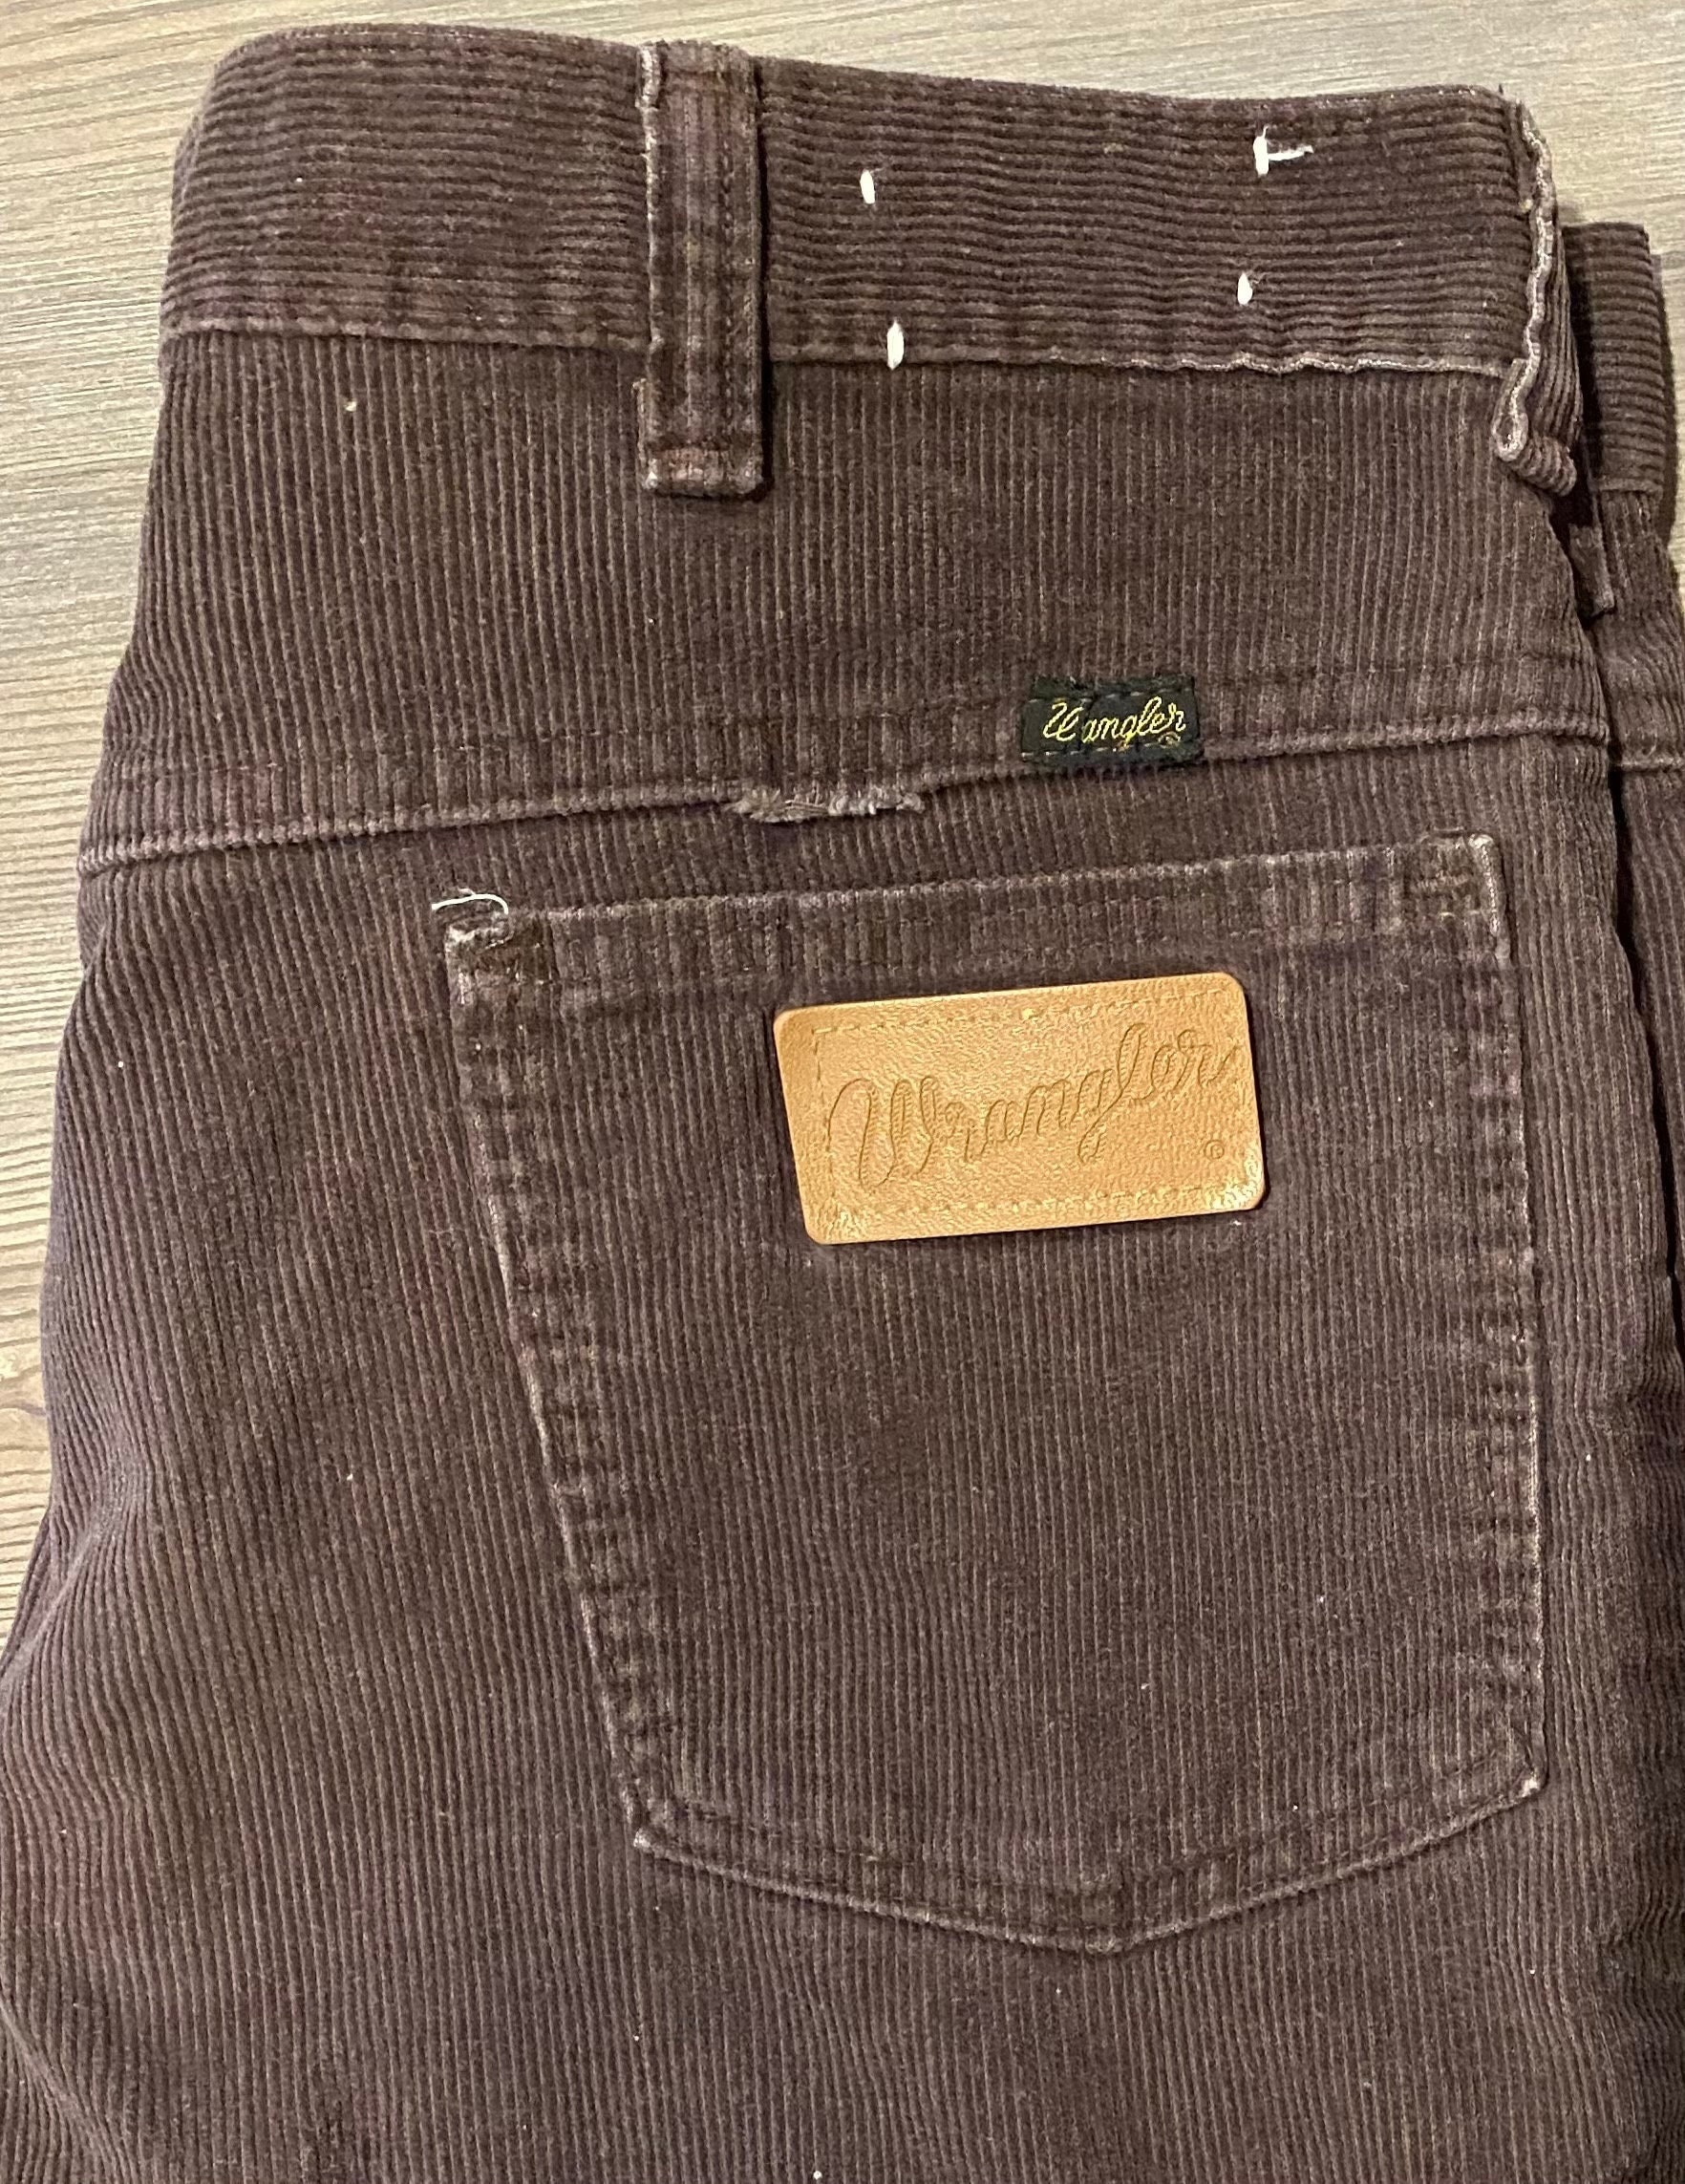 Vintage Brown Corduroy Pants 90s Corduroy Slacks Baby Boy - Etsy